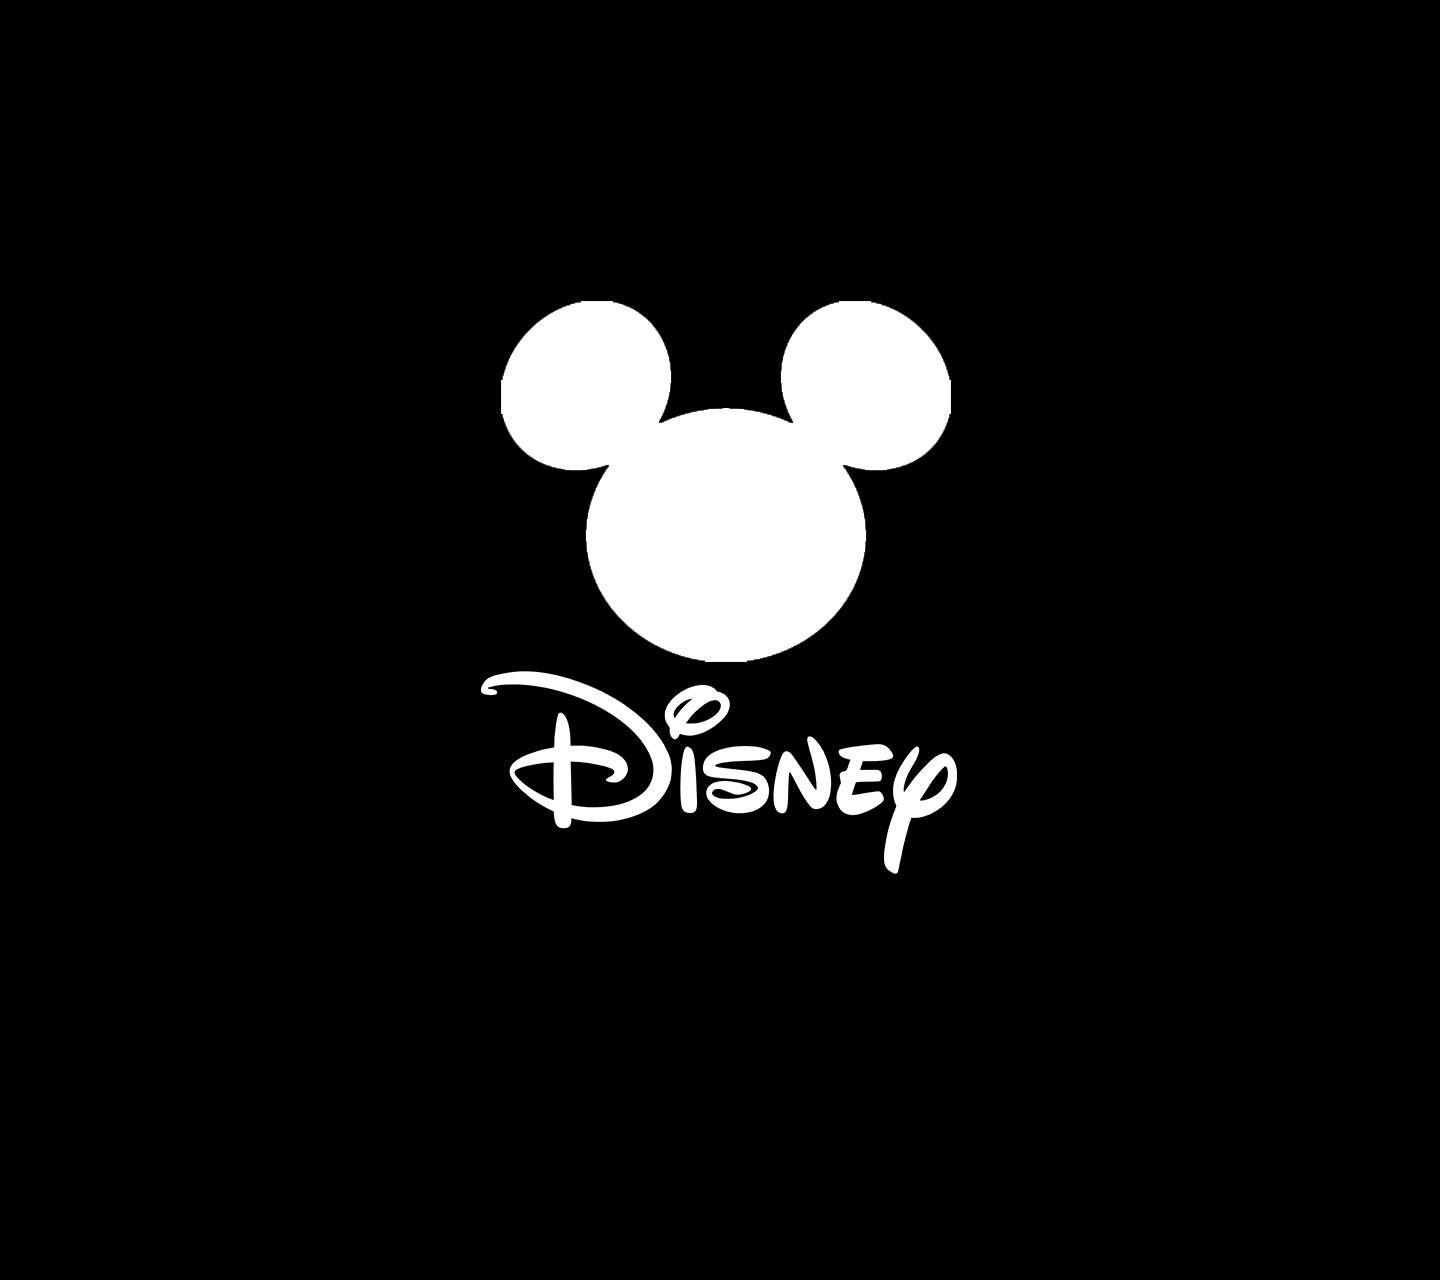 Black Disney Logo - Disney Logo Black Wallpaper by NeoMystic - f2 - Free on ZEDGE™